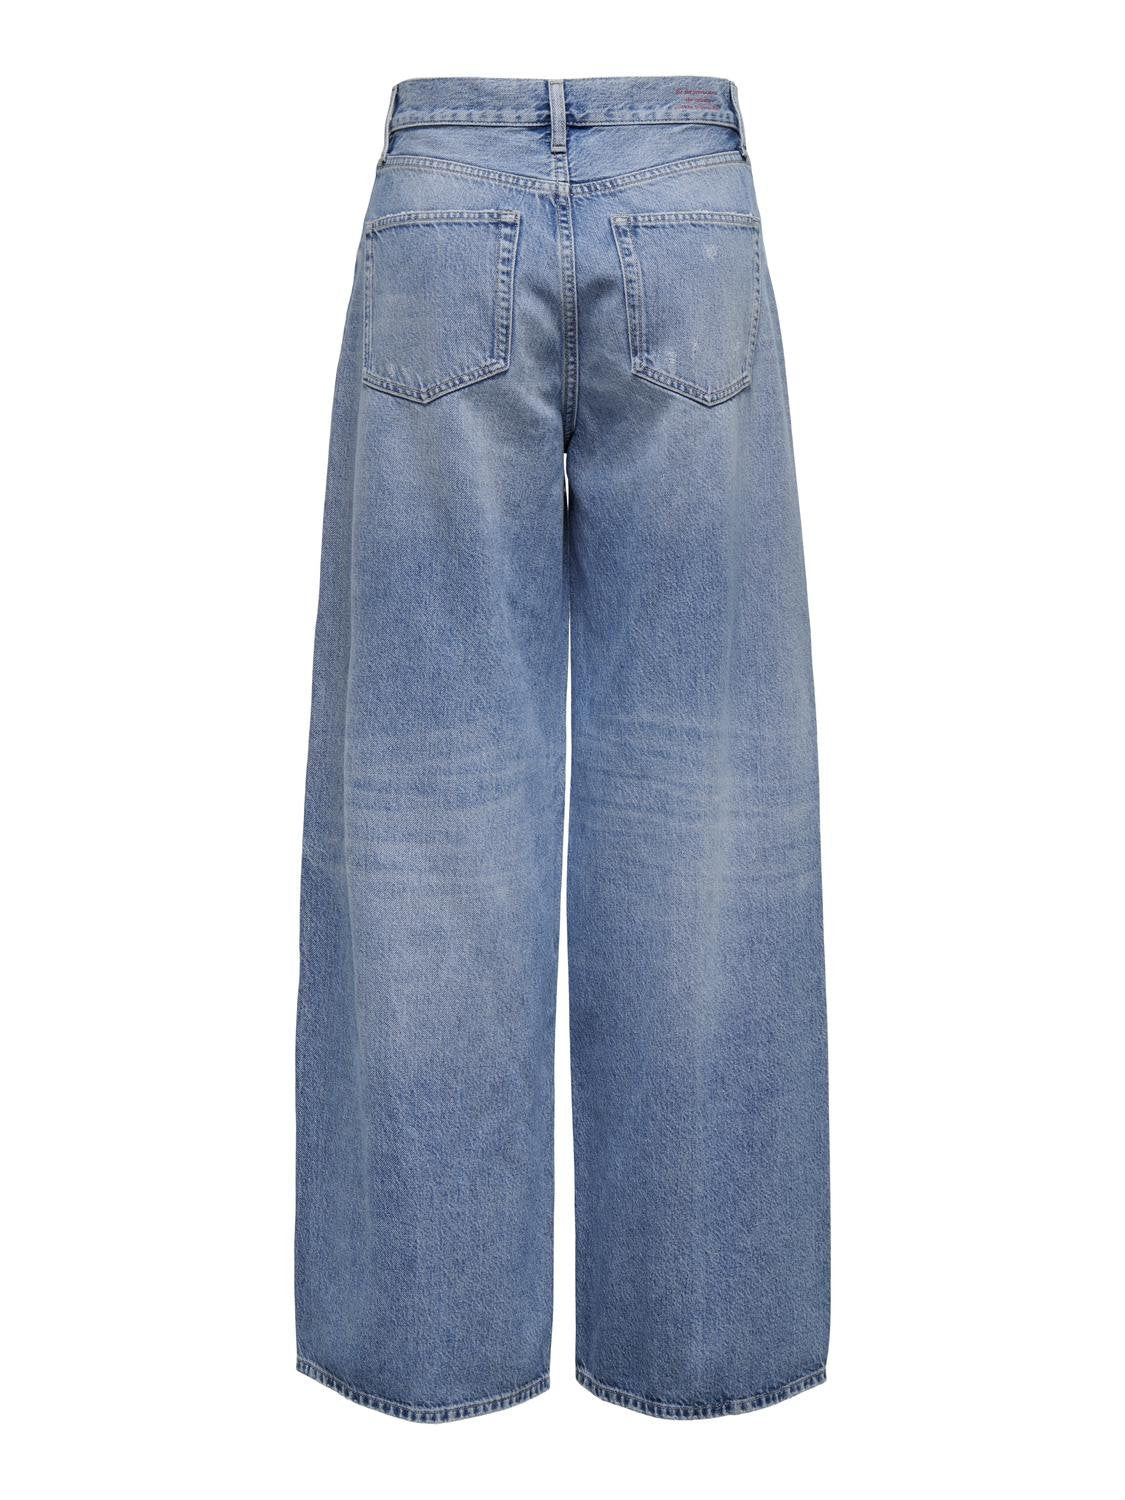 ONLSONIC Jeans - Medium Blue Denim